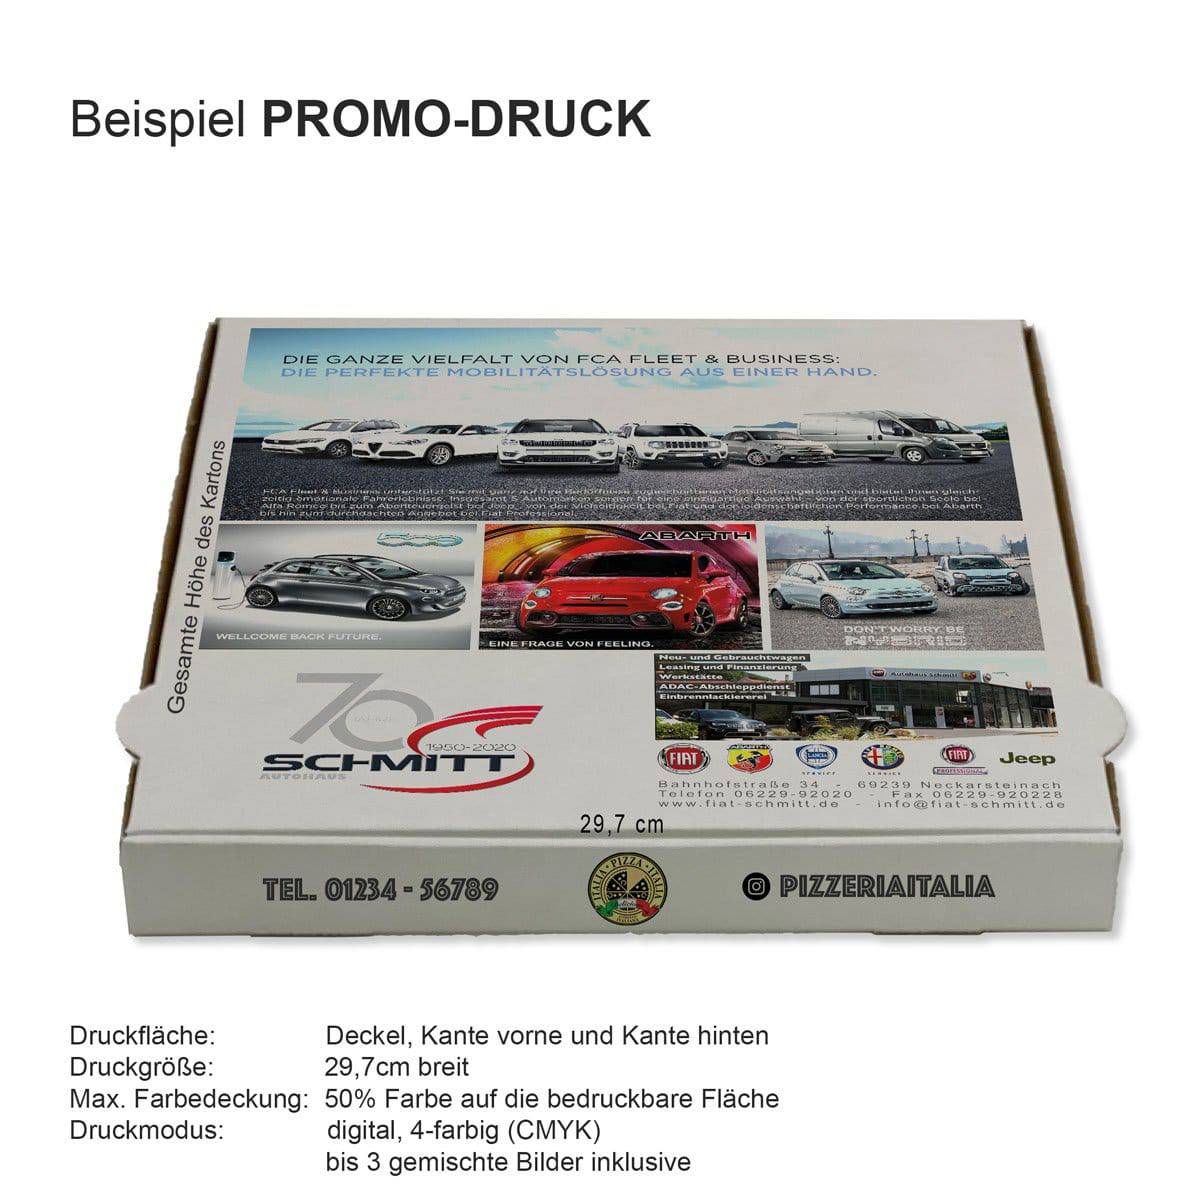 200 Stk. | 24x24x4 cm Pizzakarton individuell personalisiert digital bedruckt - Pizzakarton - buongiusti AG - personalisiert ab 100 Stück